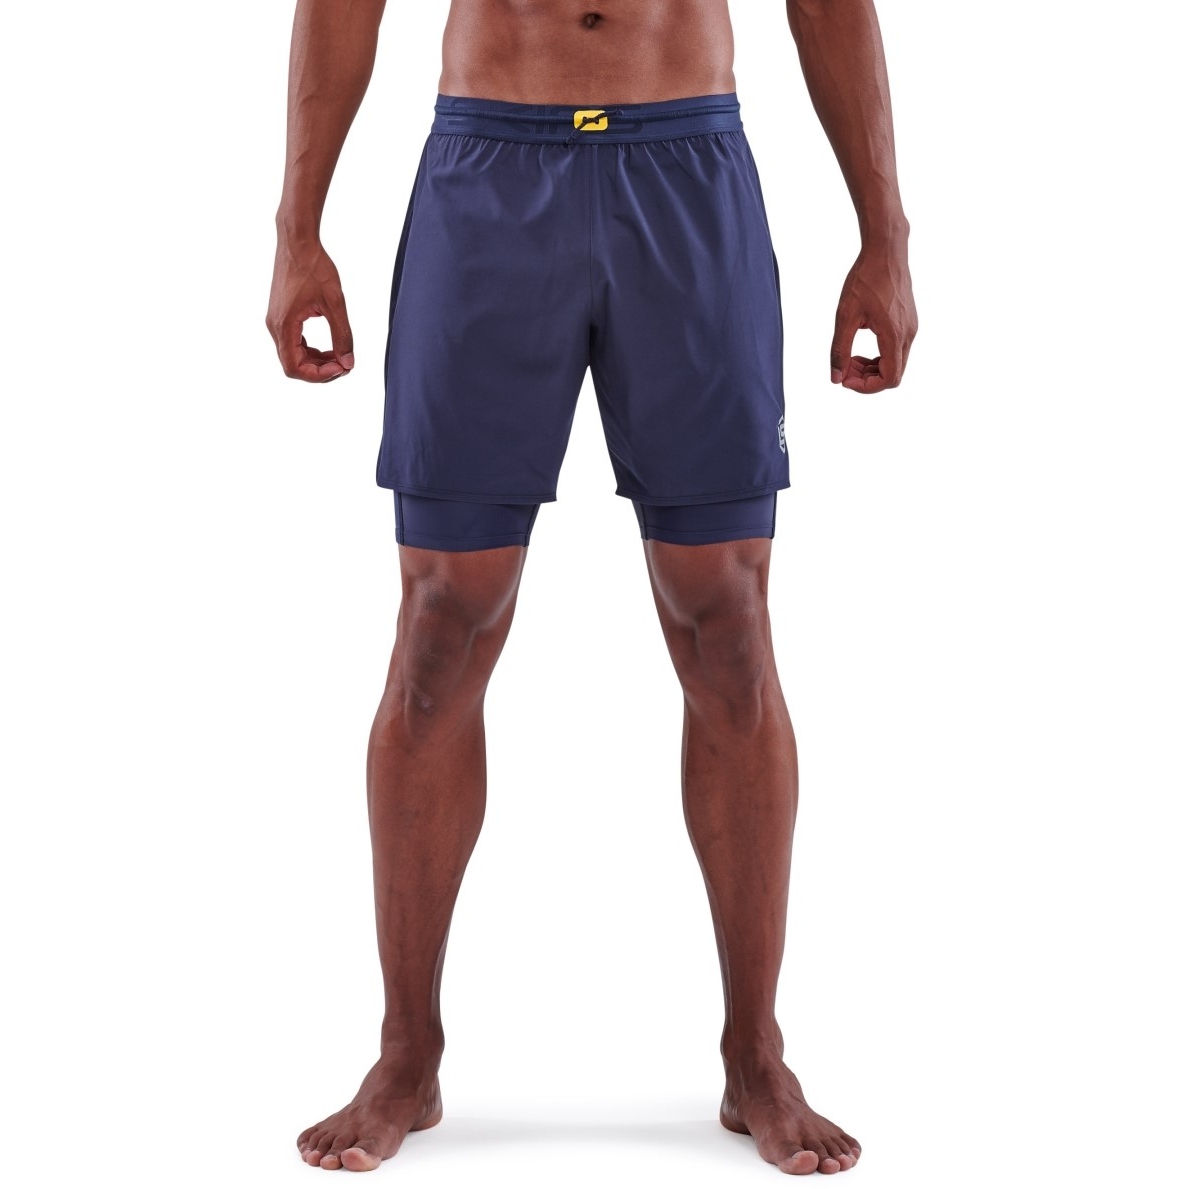 Foto de SKINS 3-Series Superpose Pantalones Cortos Fitness 2en1 Hombre - Navy Blue